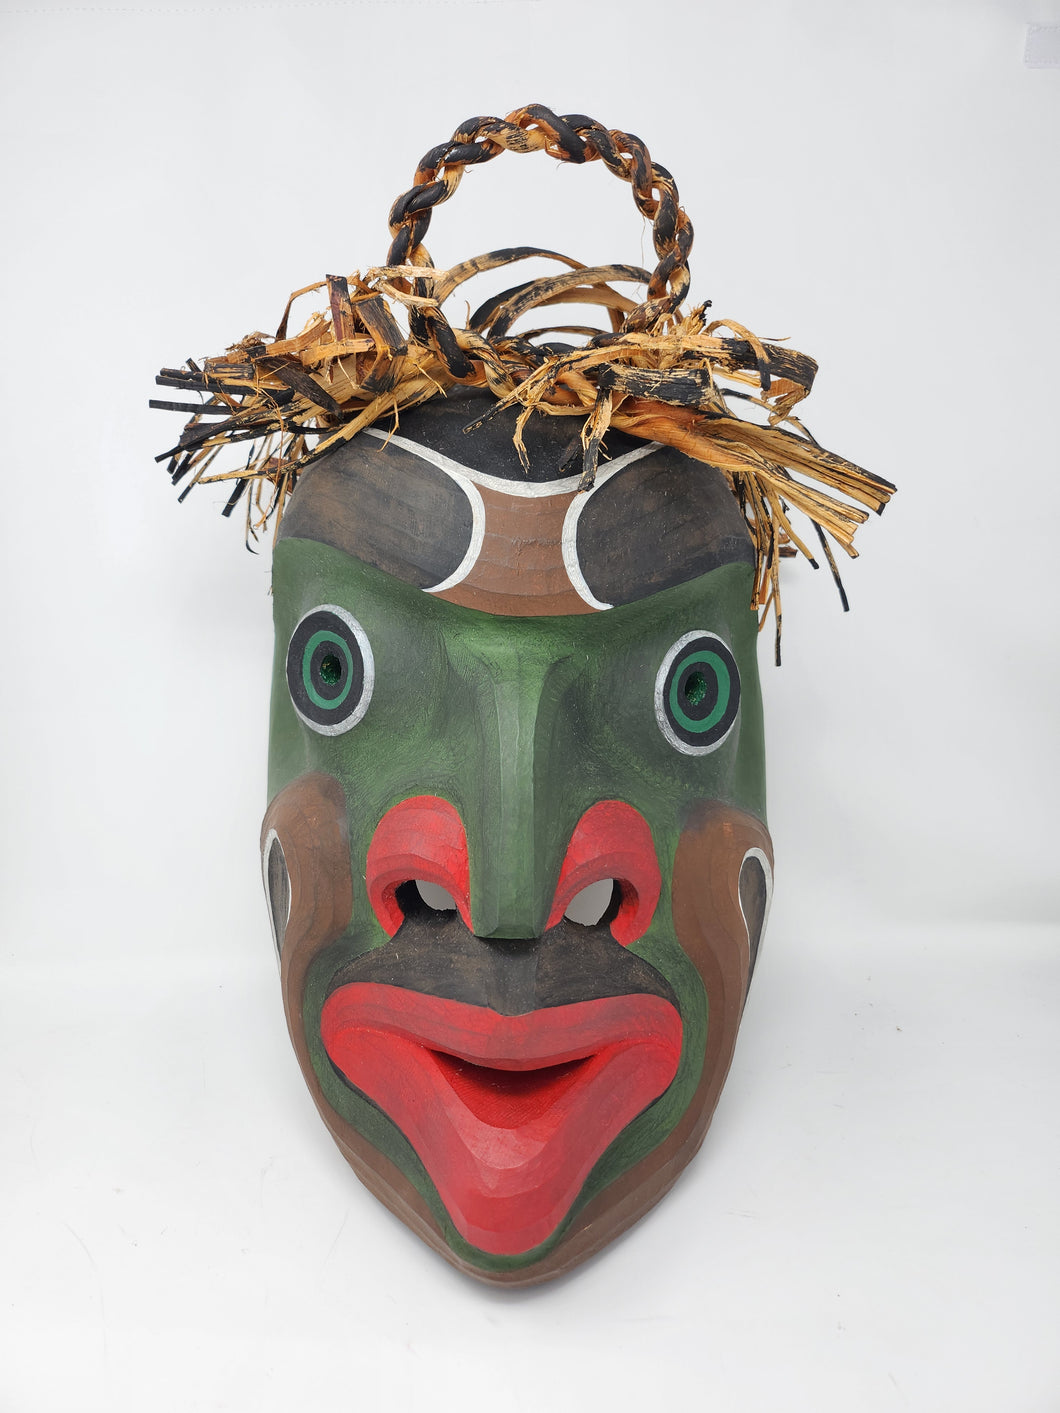 Bakwus mask by Talon George